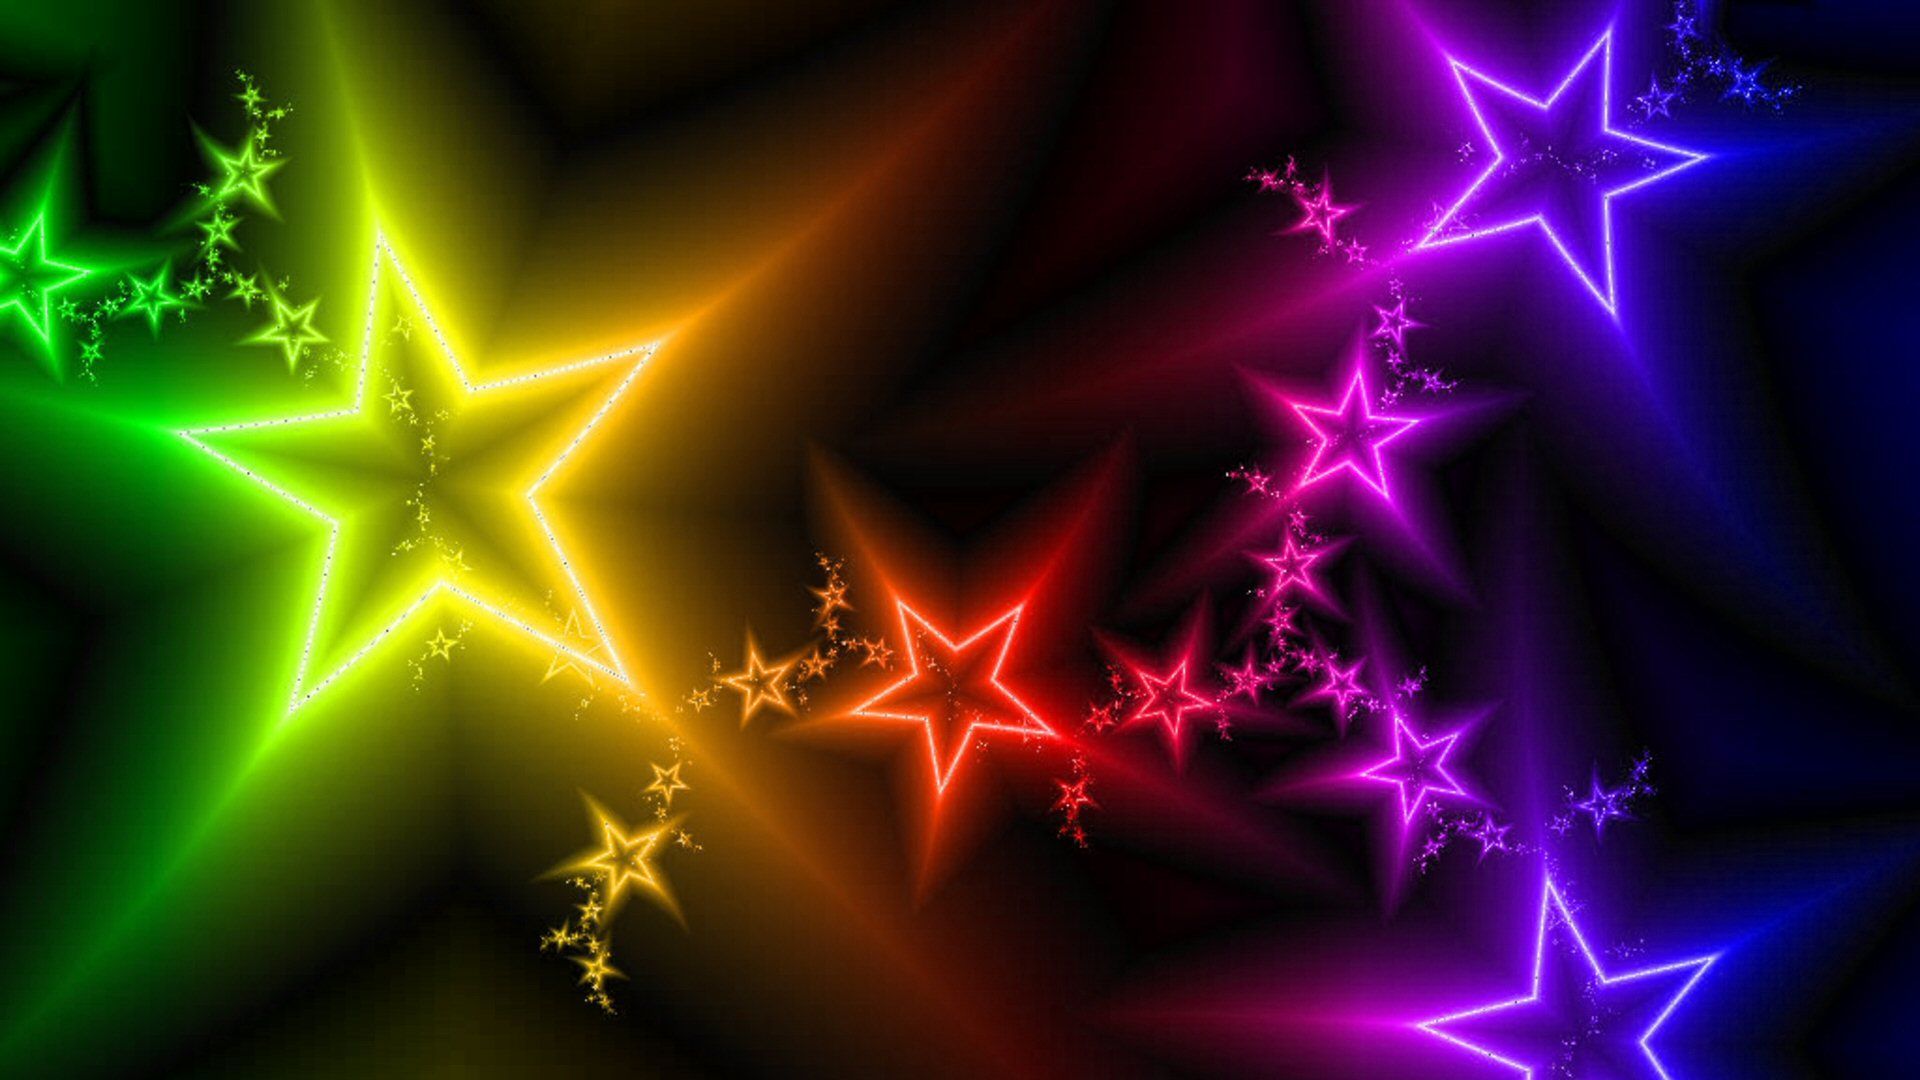 colored-stars-cool-full-hd-wallpapers-for-desktop-1920x1080.jpg